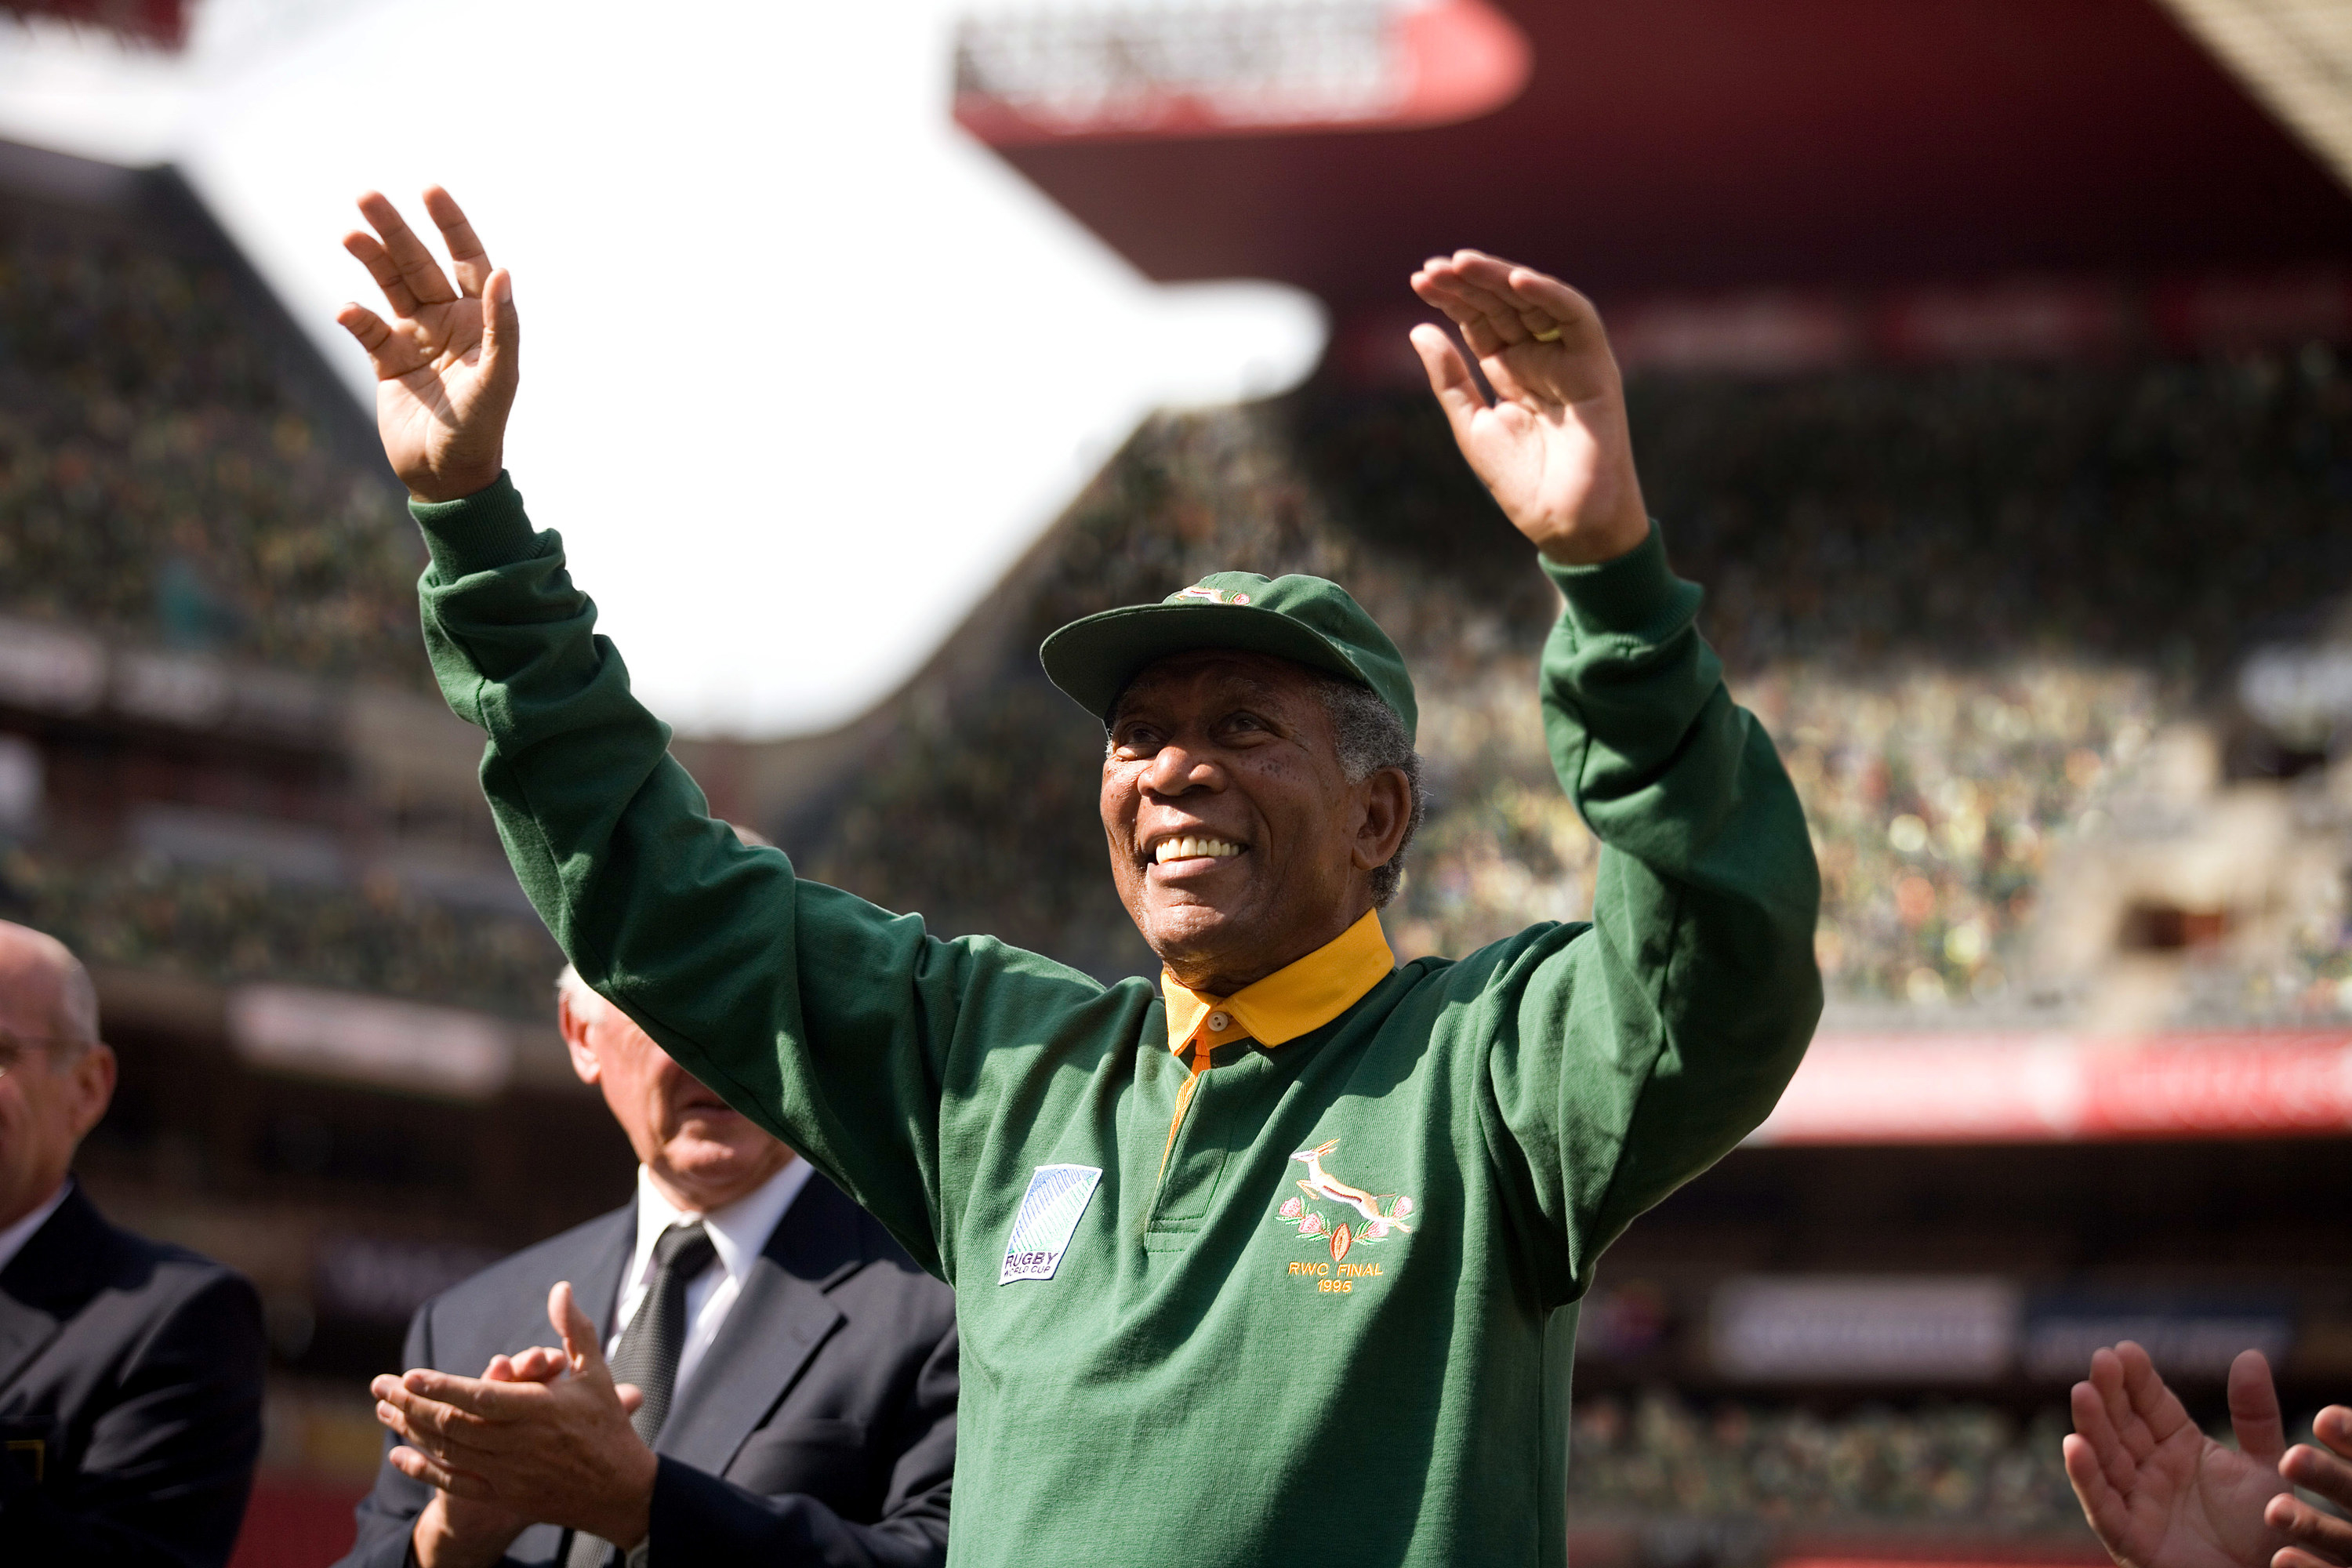 Mandela greets fans in a Springbok jersey